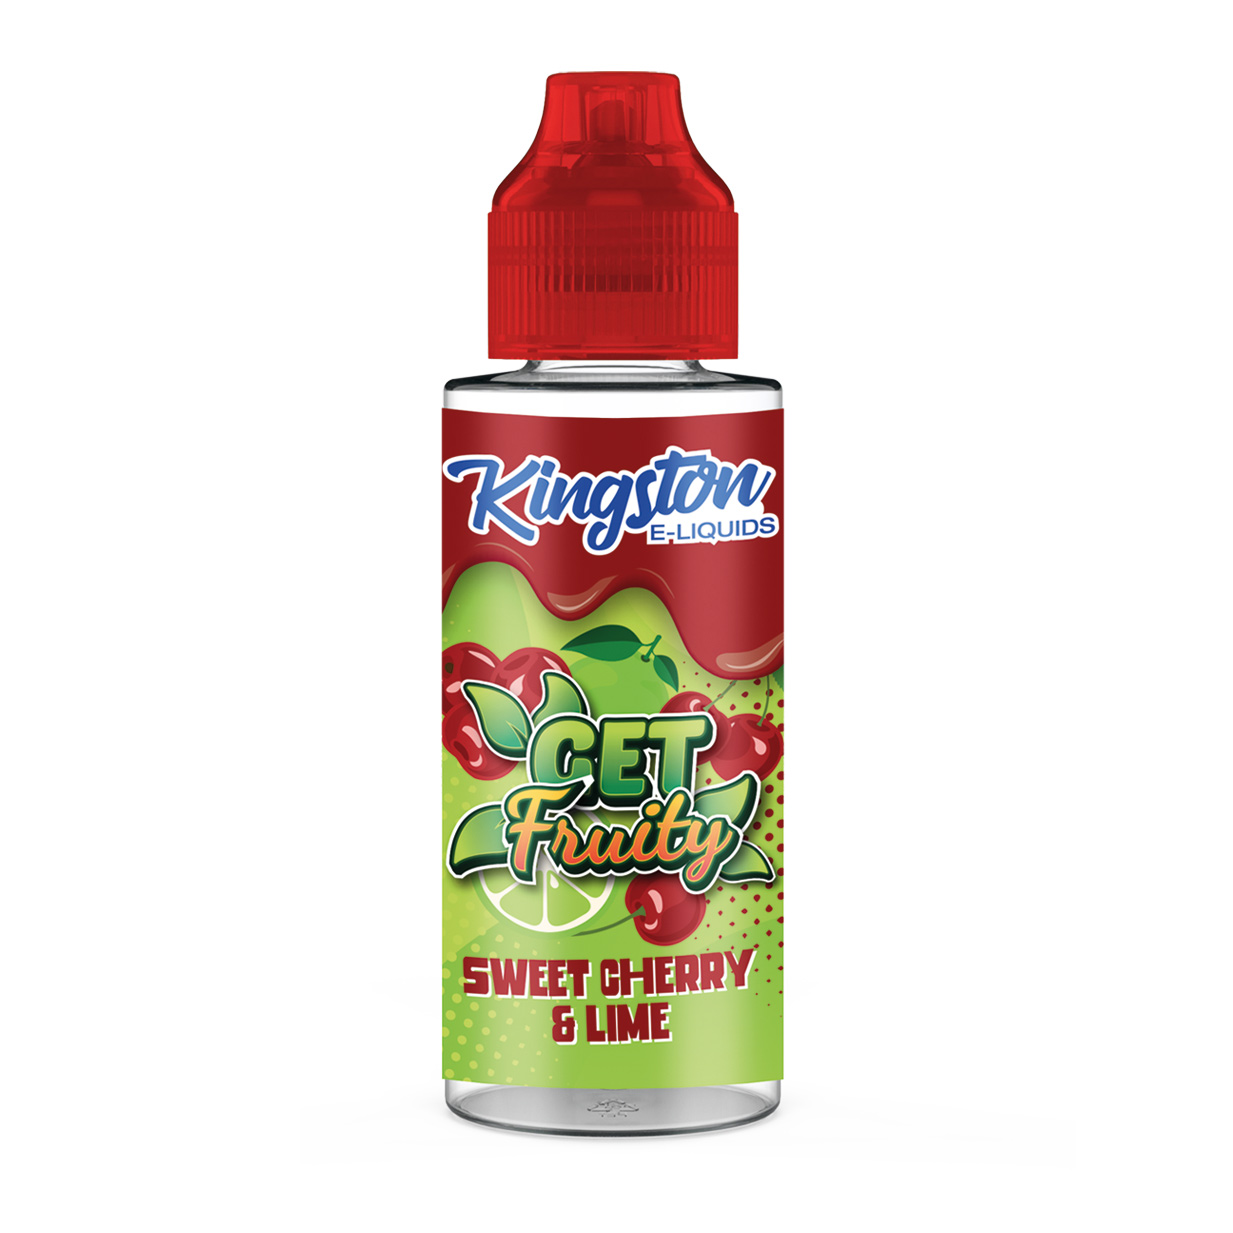 Sweet Cherry Lime by Kingston Get Fruity 100ml.jpg